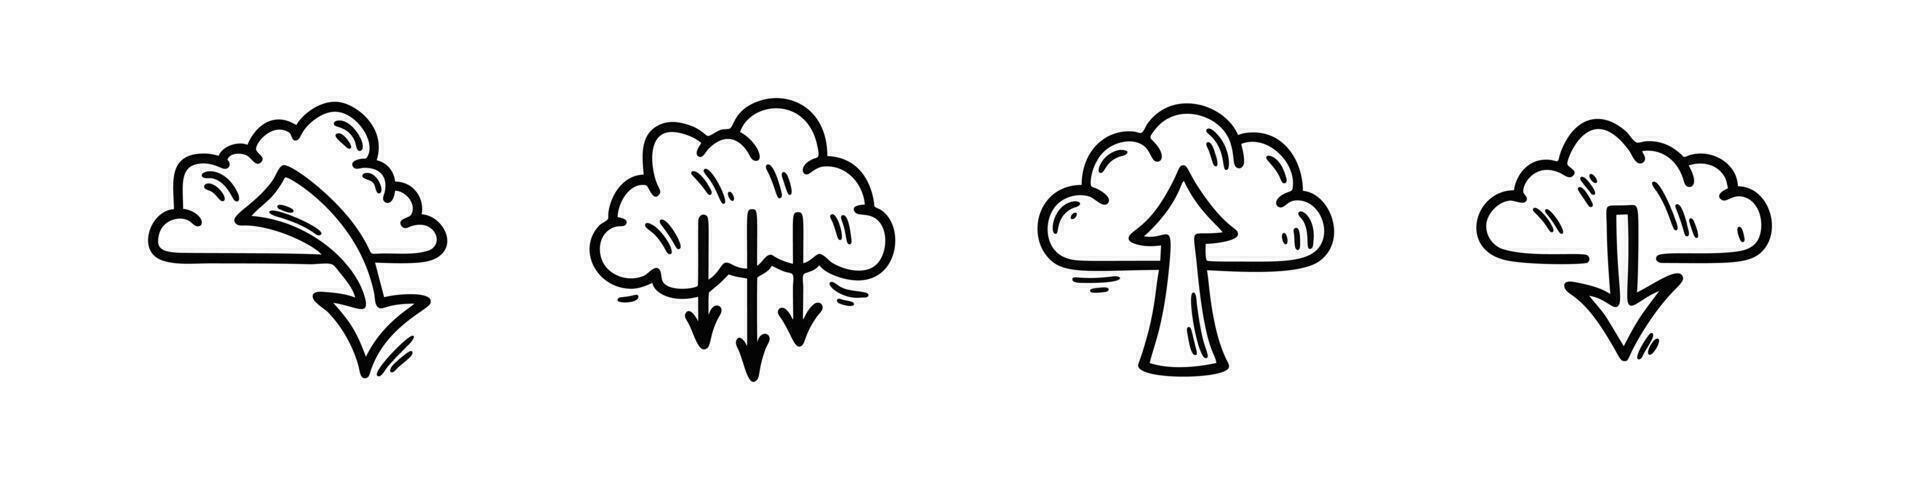 Cloud computing technology doodle icon set. Hand drawn data server service. Digital network file transfer sketch vector illustrations. Download system.